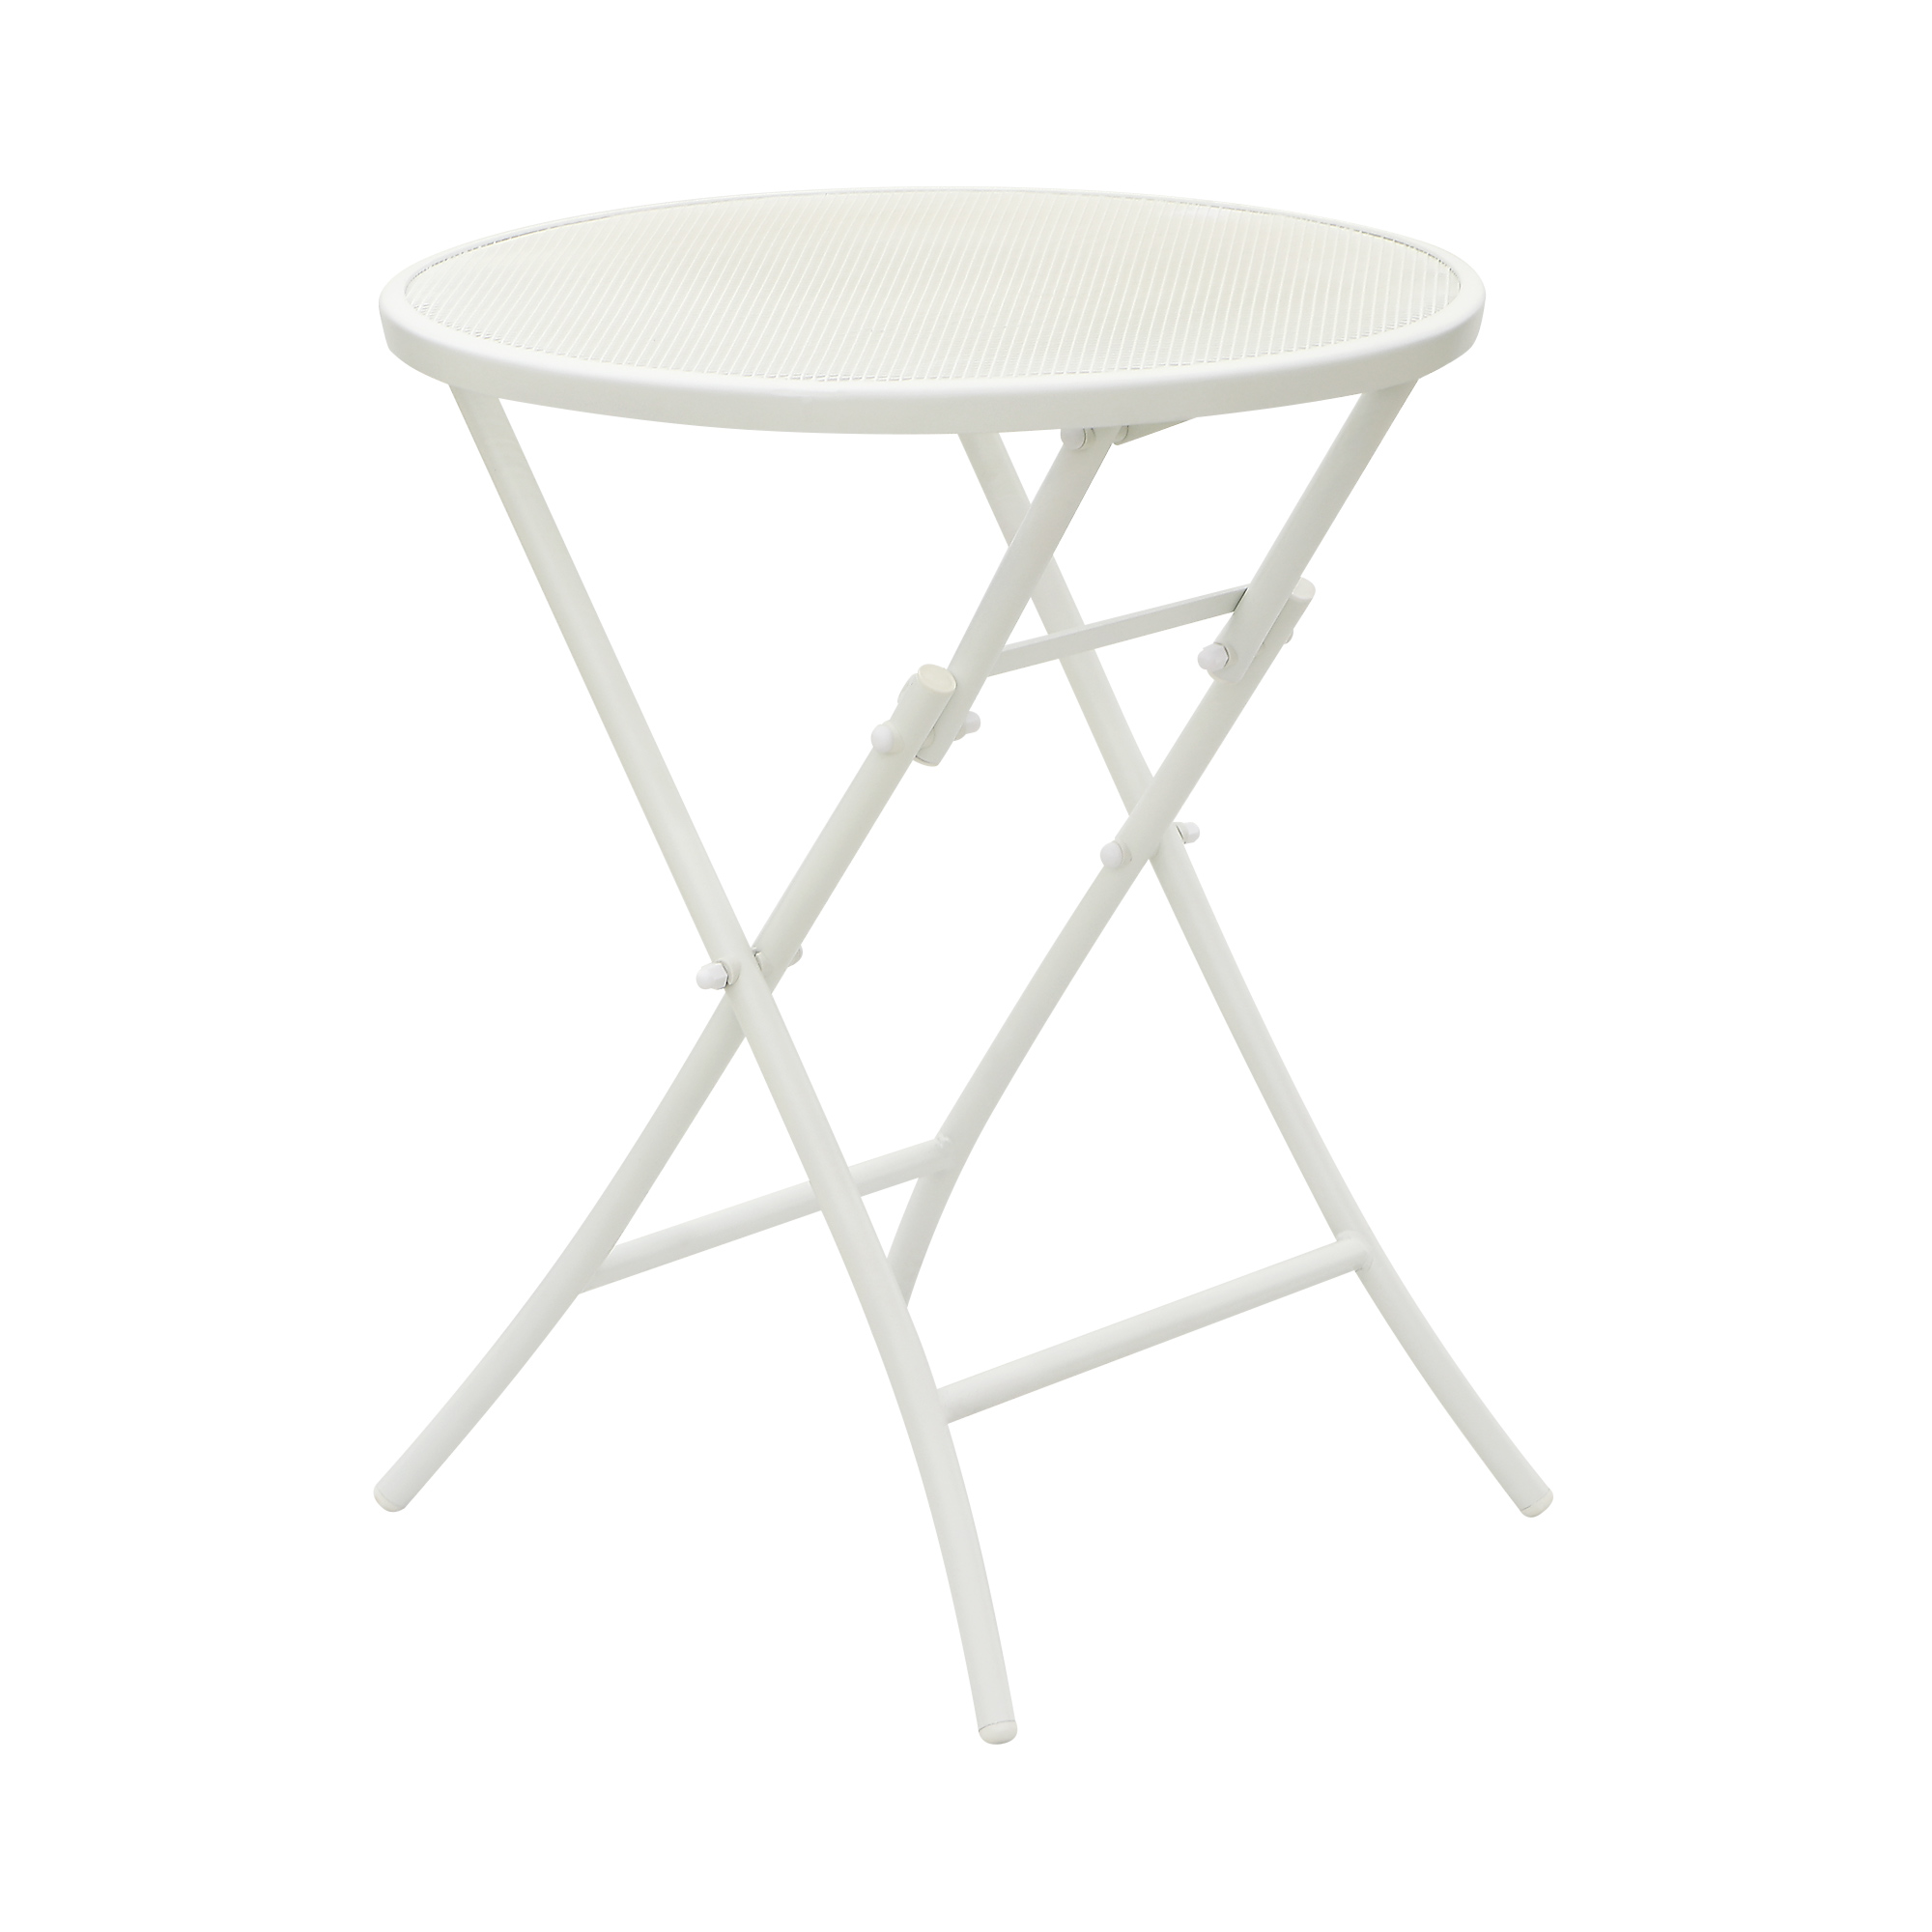 Столик складной Koopman furniture 60х60x72cm, цвет белый - фото 1